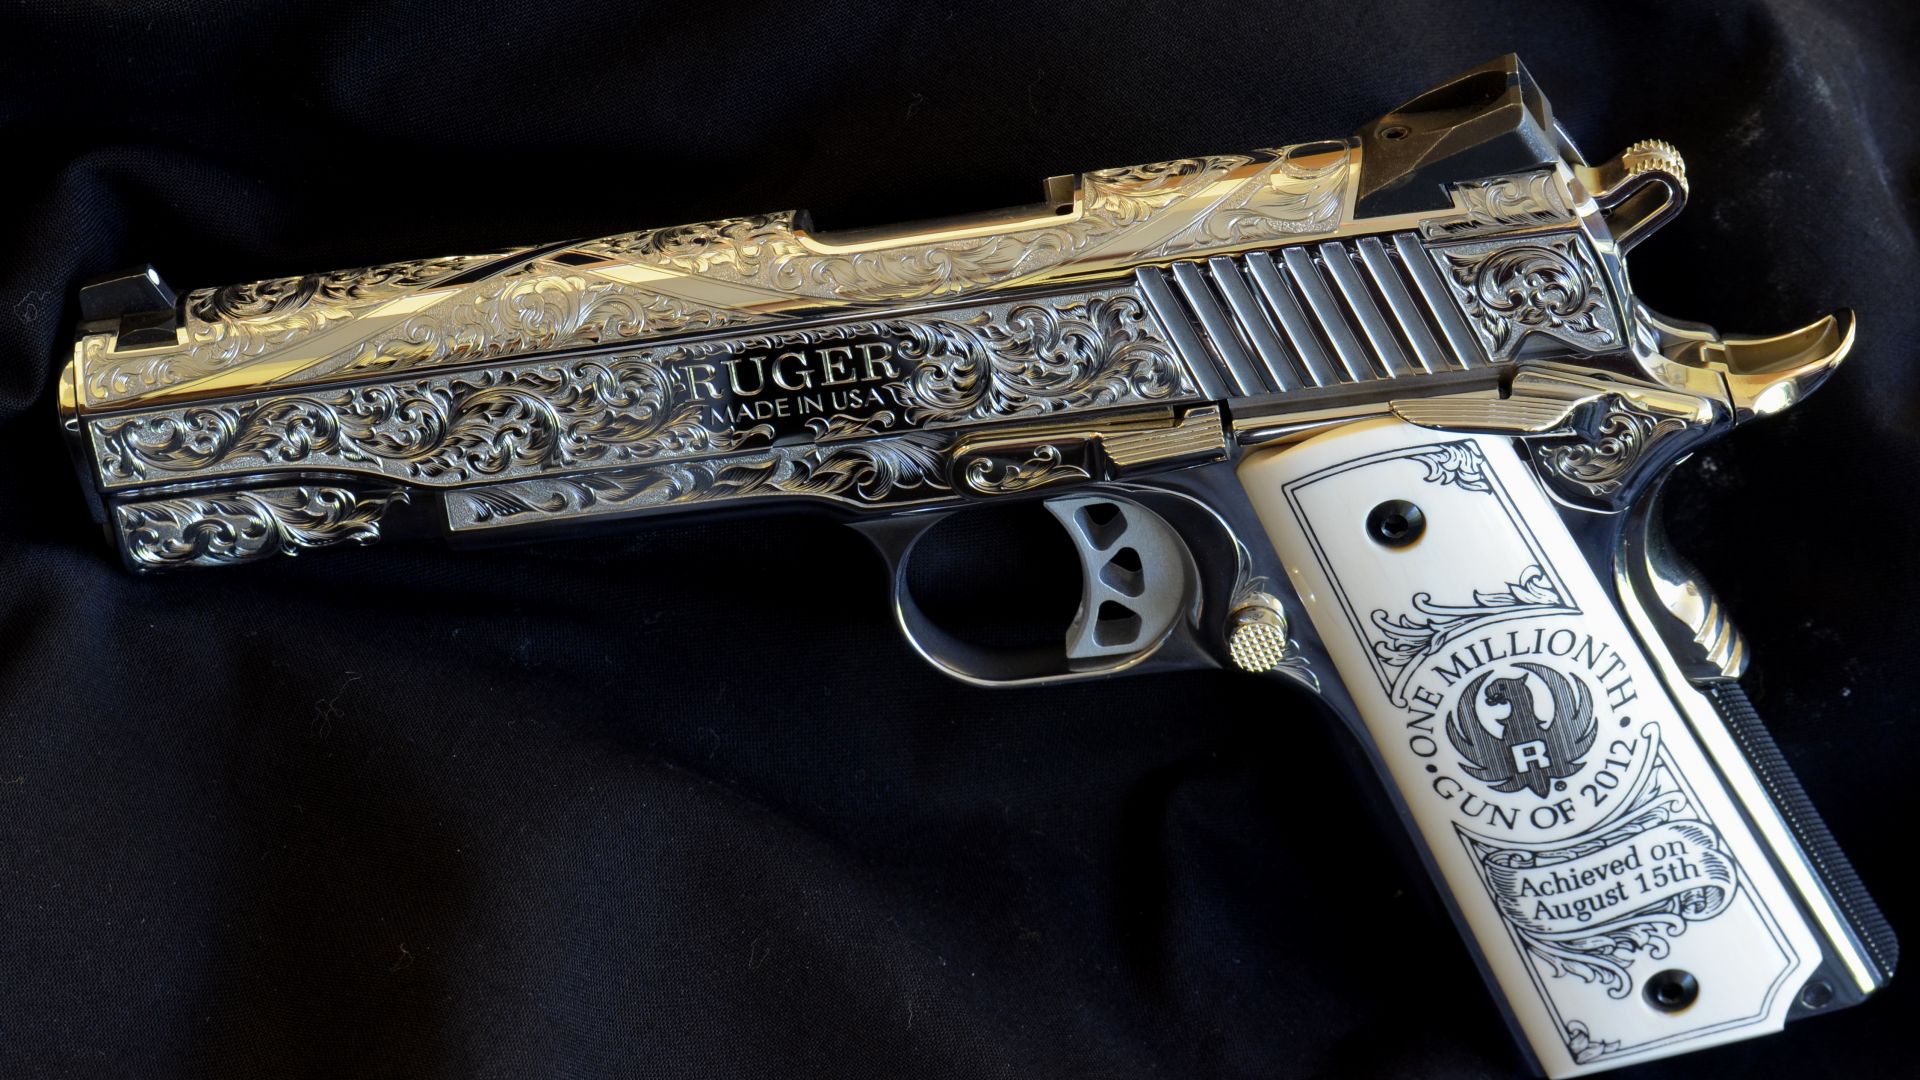 Ругер, Блекхавк, пистолет, США, Ruger Blackhawk, pistol, USA (horizontal)